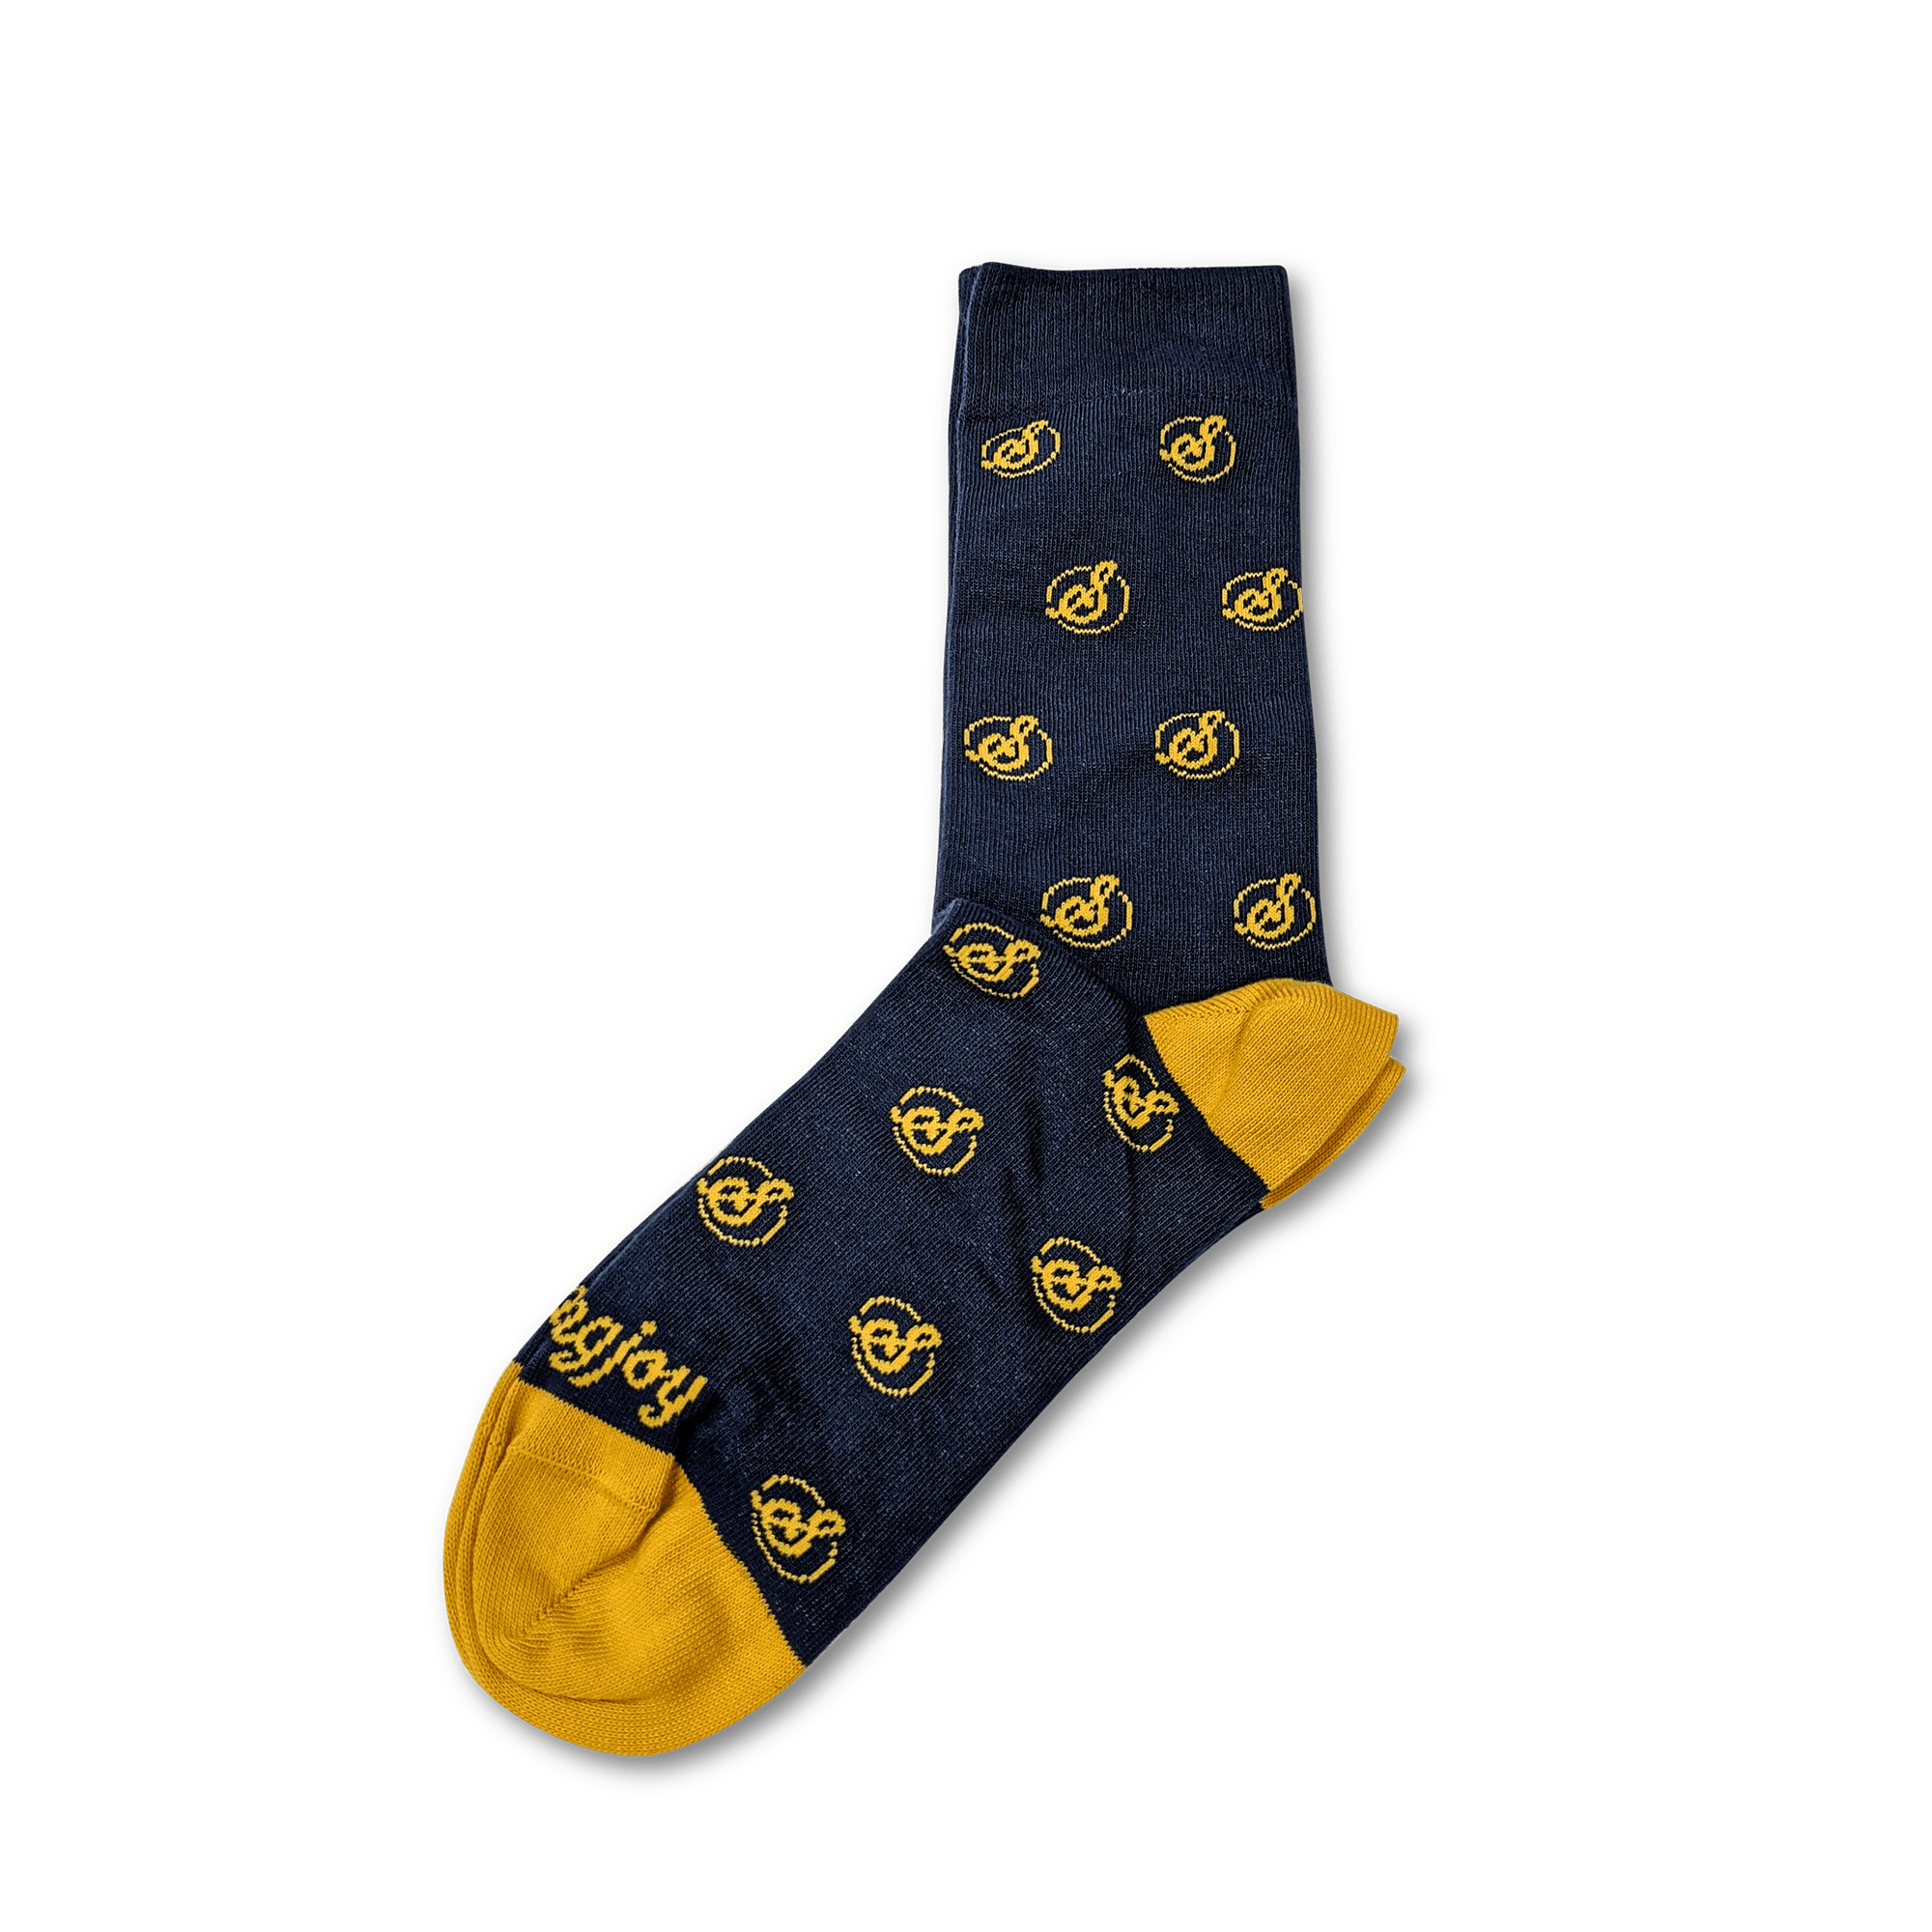 Stringjoy Knit Gold Toe Socks